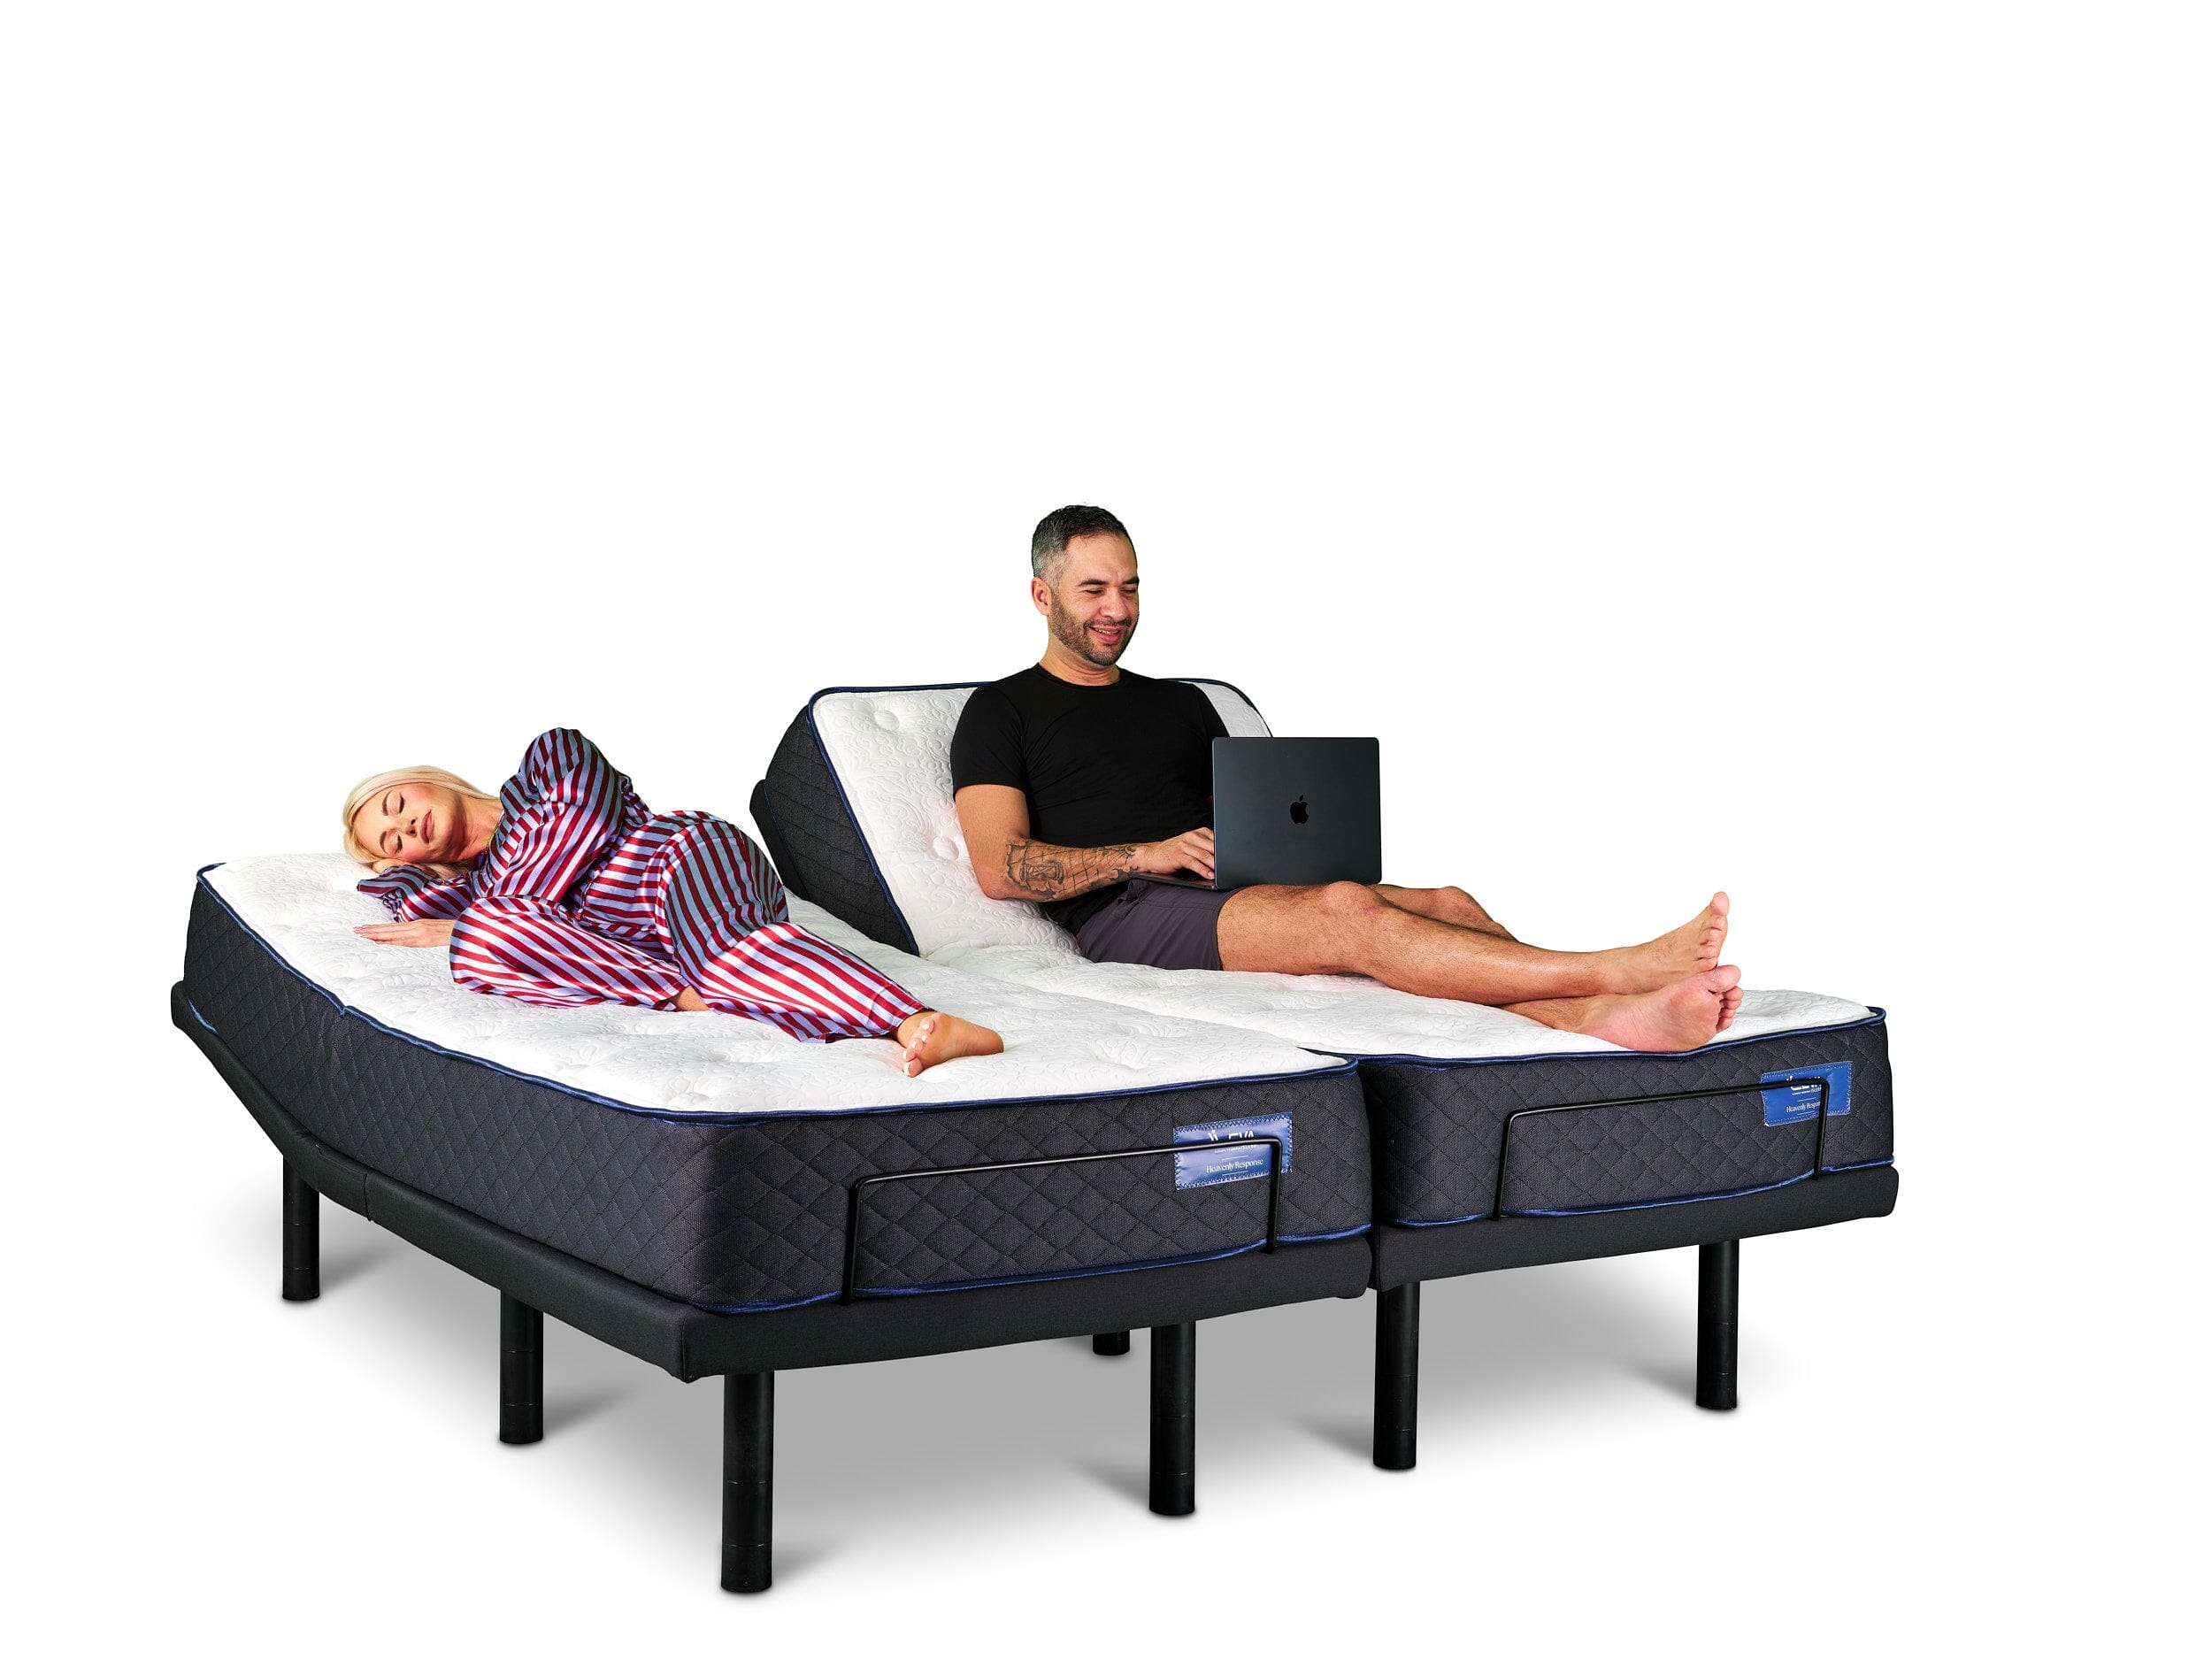 Heavenly Response Split King Adjustable Bed